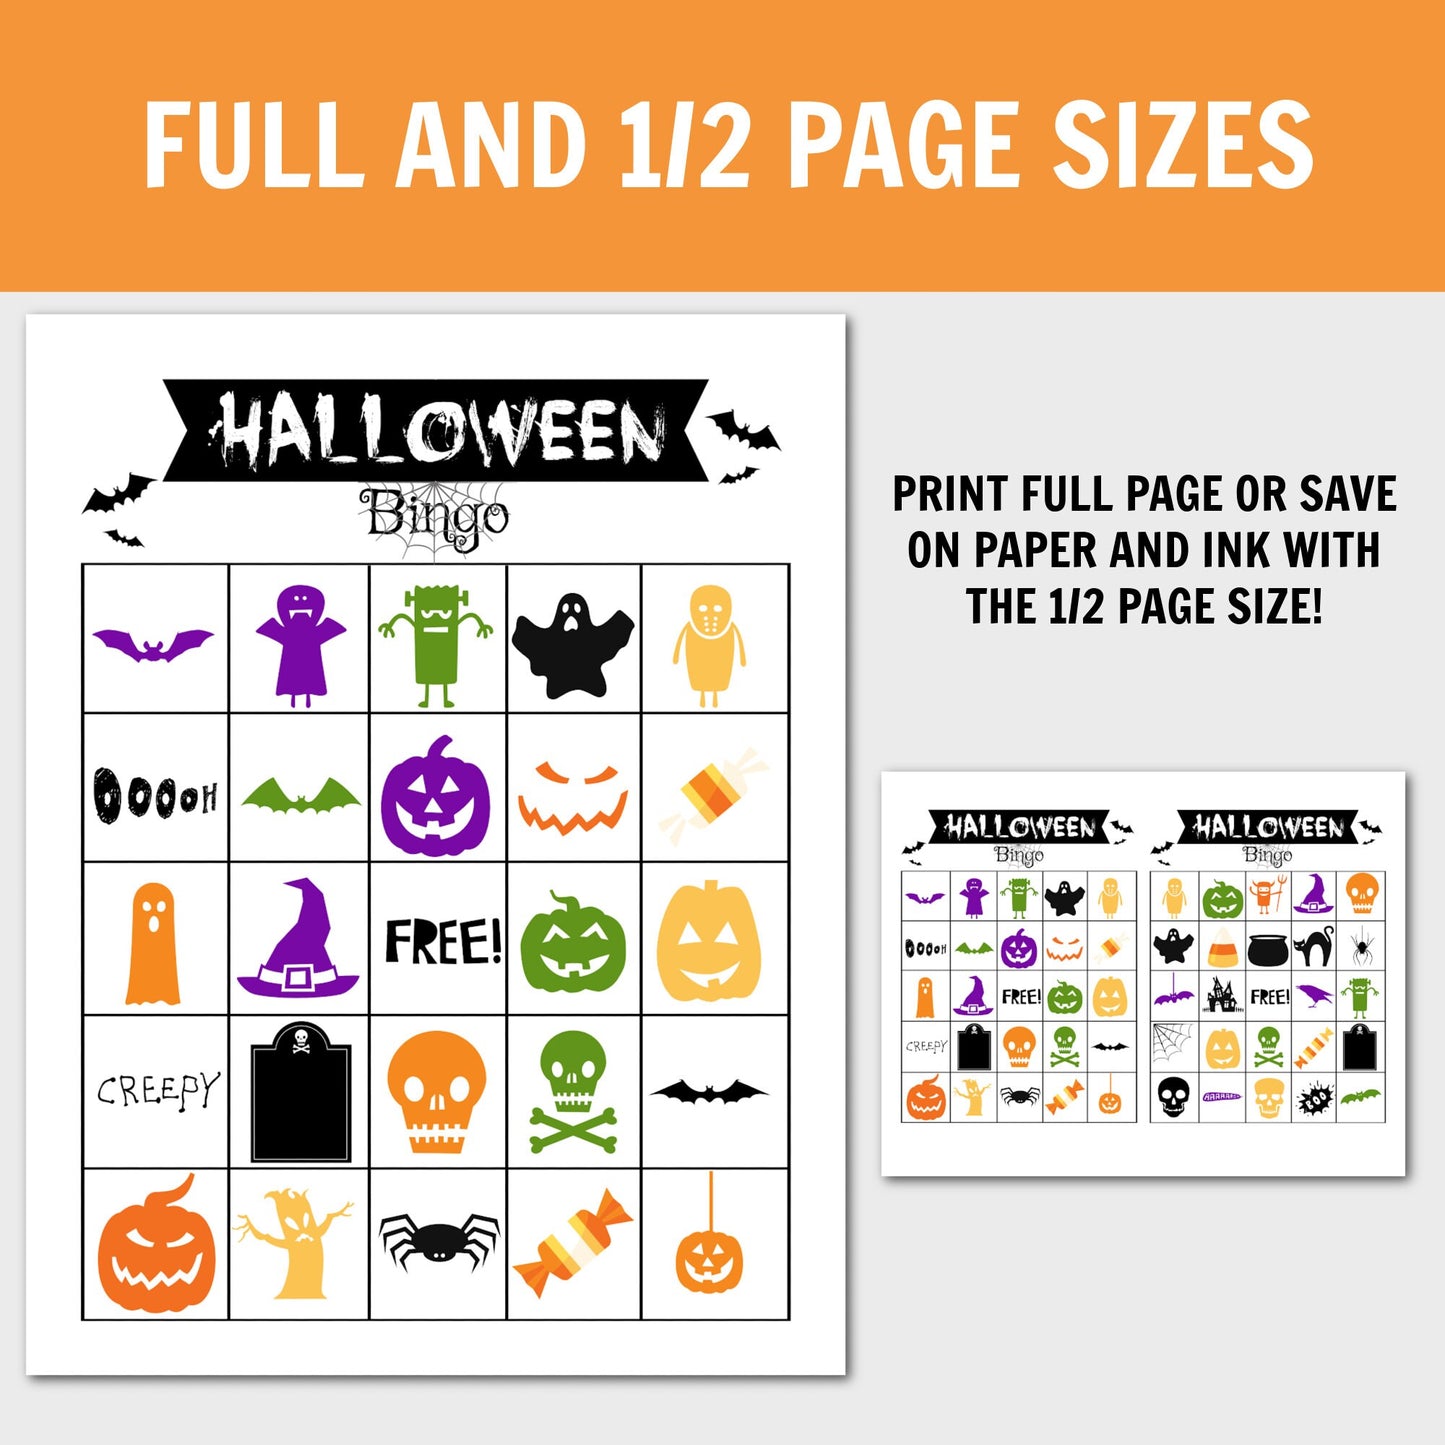 Halloween Bingo Cards, Printable PDF, 30 cards, Halloween Games, Class Party Games, Halloween Party Activities, Kids Activity Idea, Game